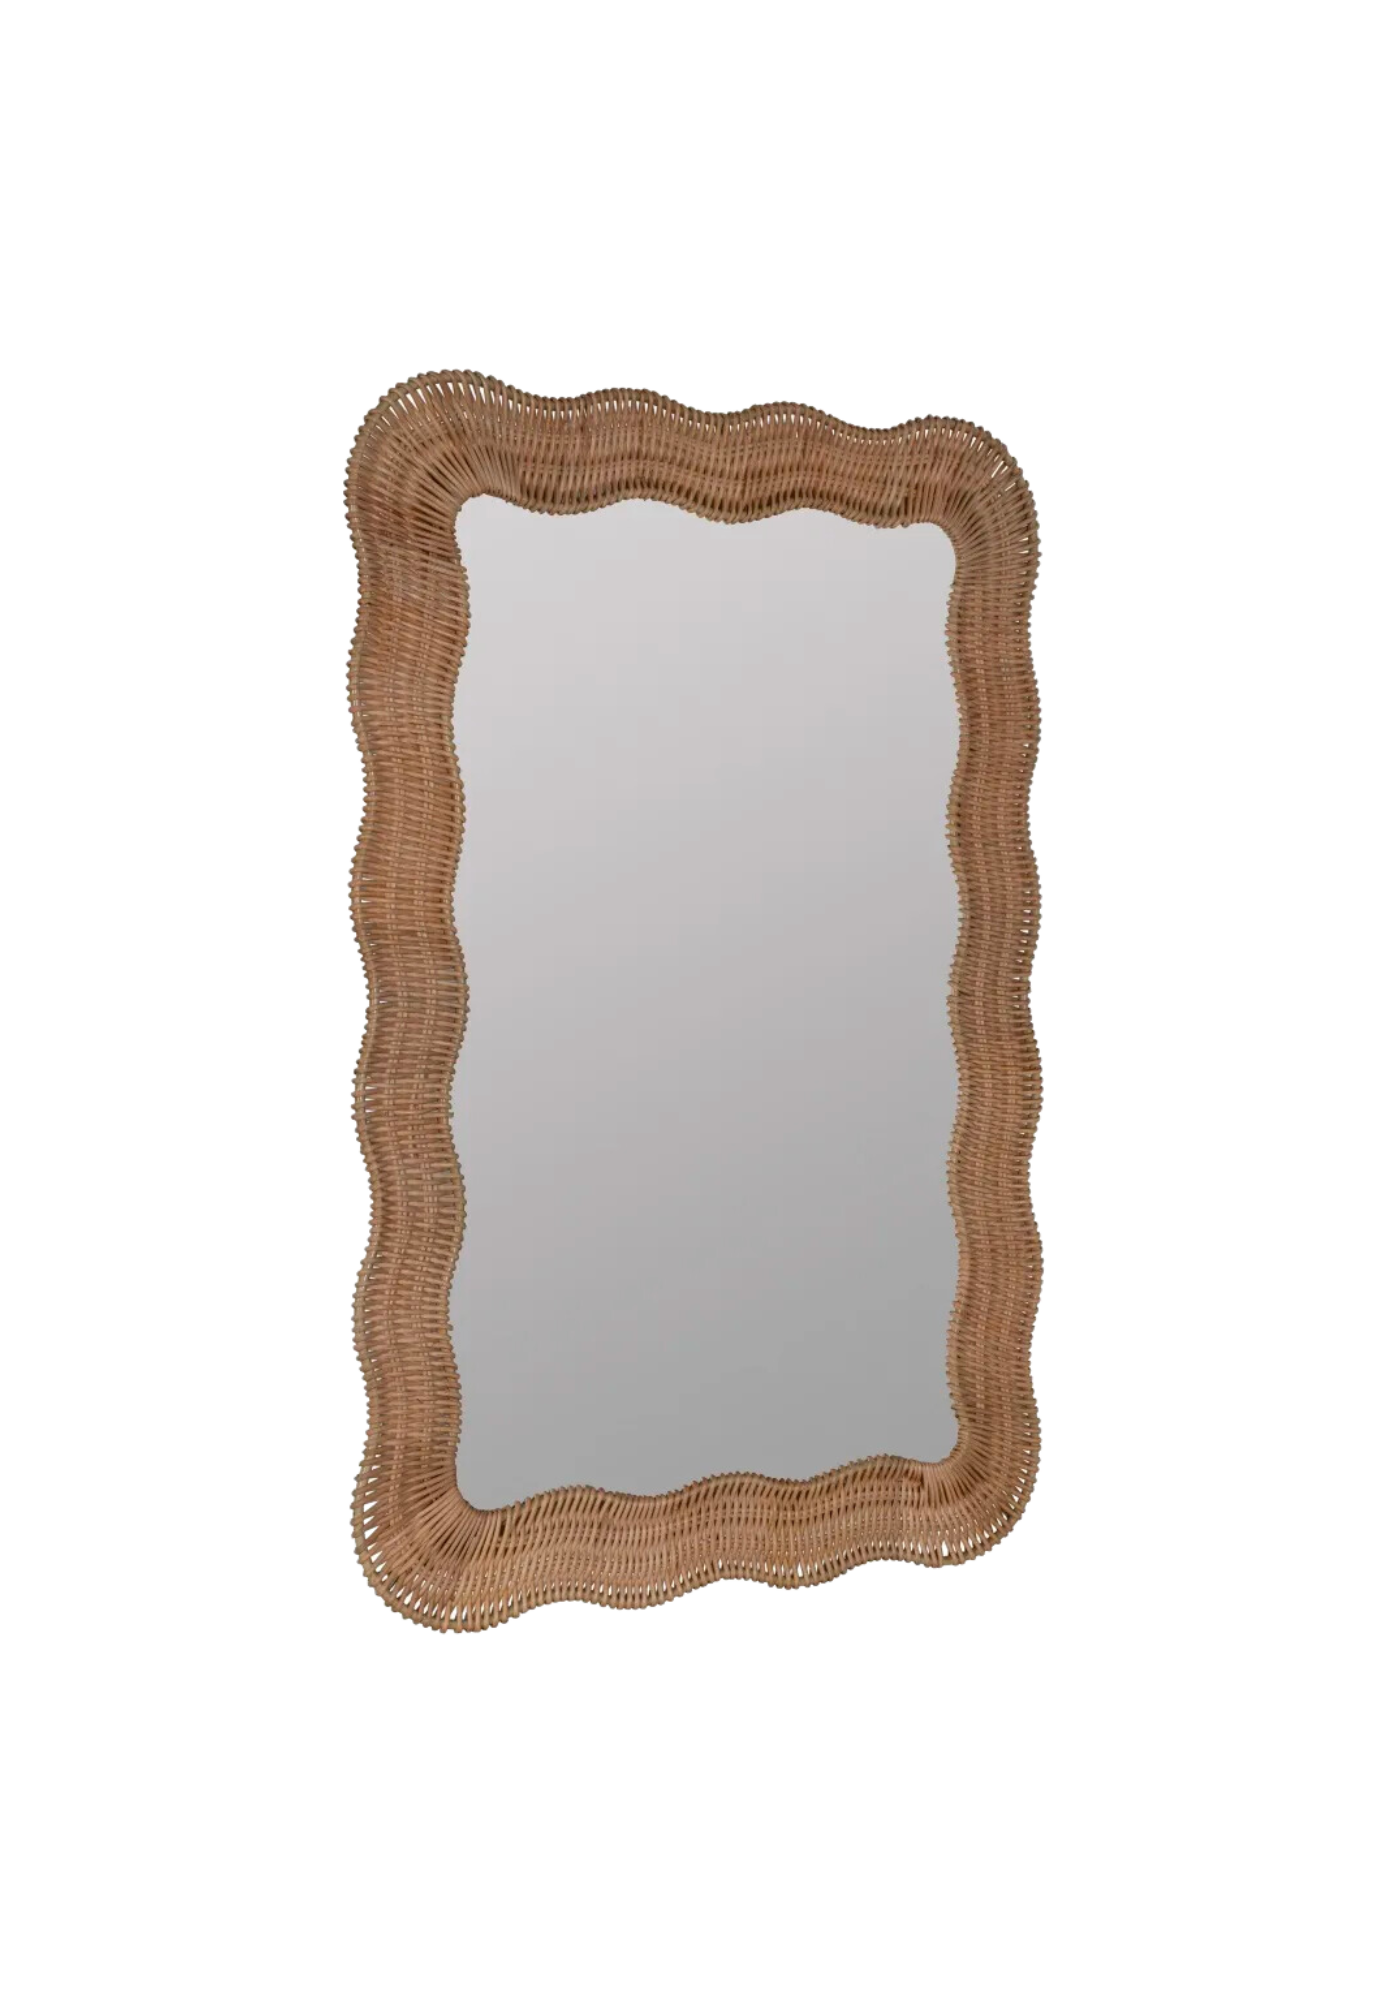 Scalloped Rattan Mirror